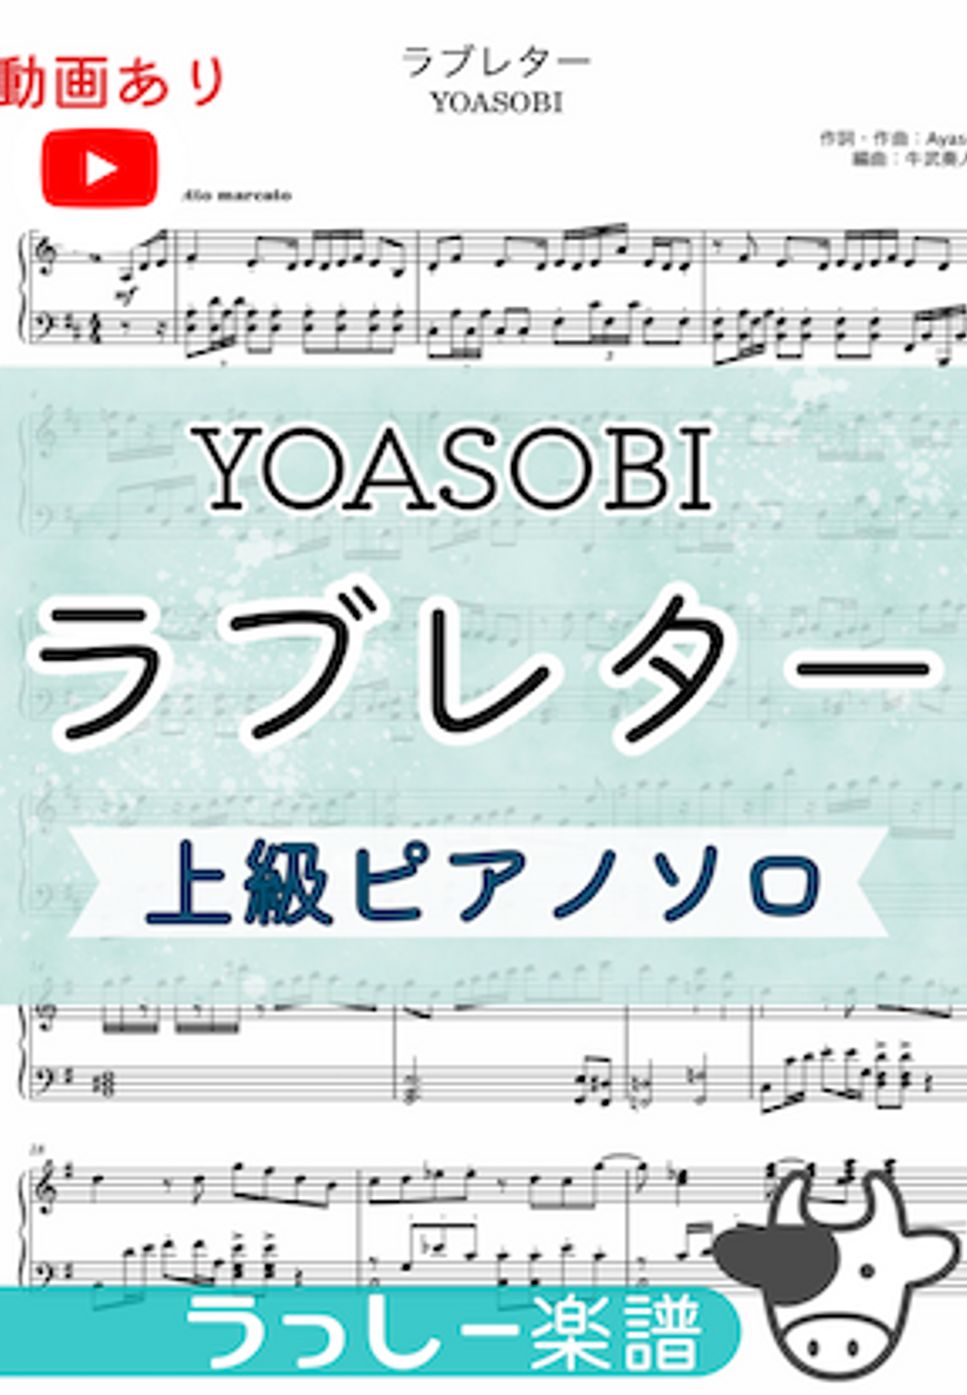 YOASOBI - ラブレター (上級ピアノソロ) by 牛武奏人